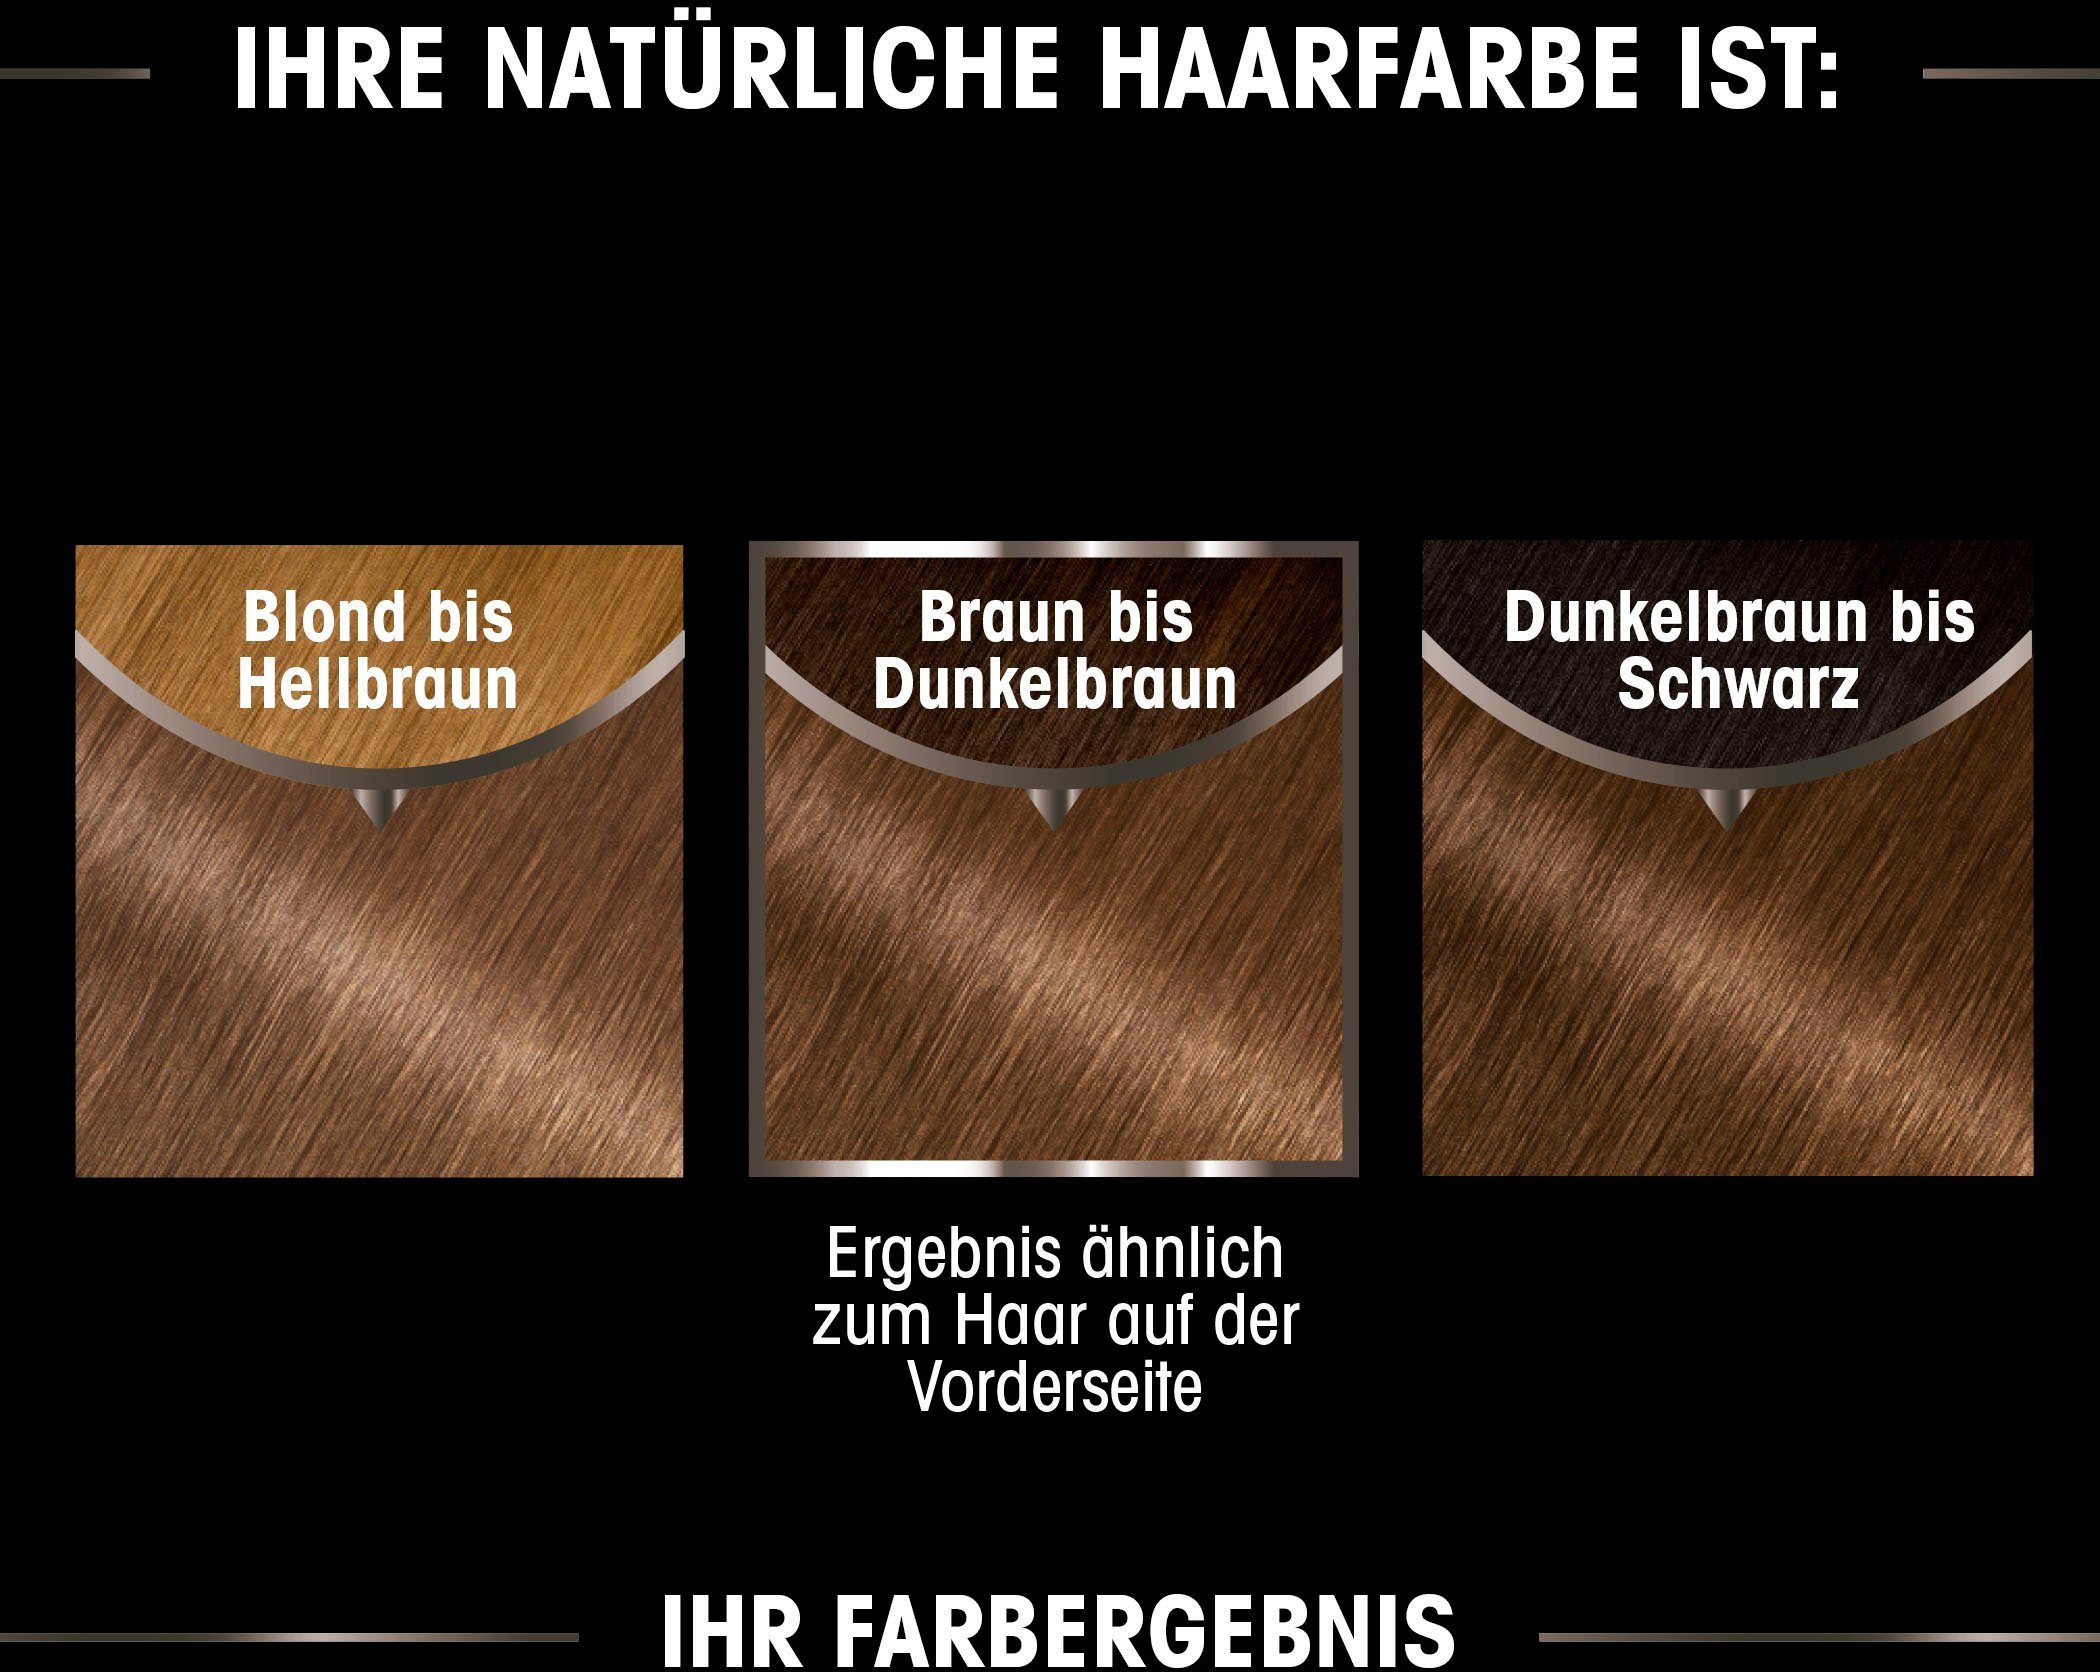 GARNIER Coloration Garnier Olia dauerhafte Set, Ölbasis 3-tlg., Haarfarbe